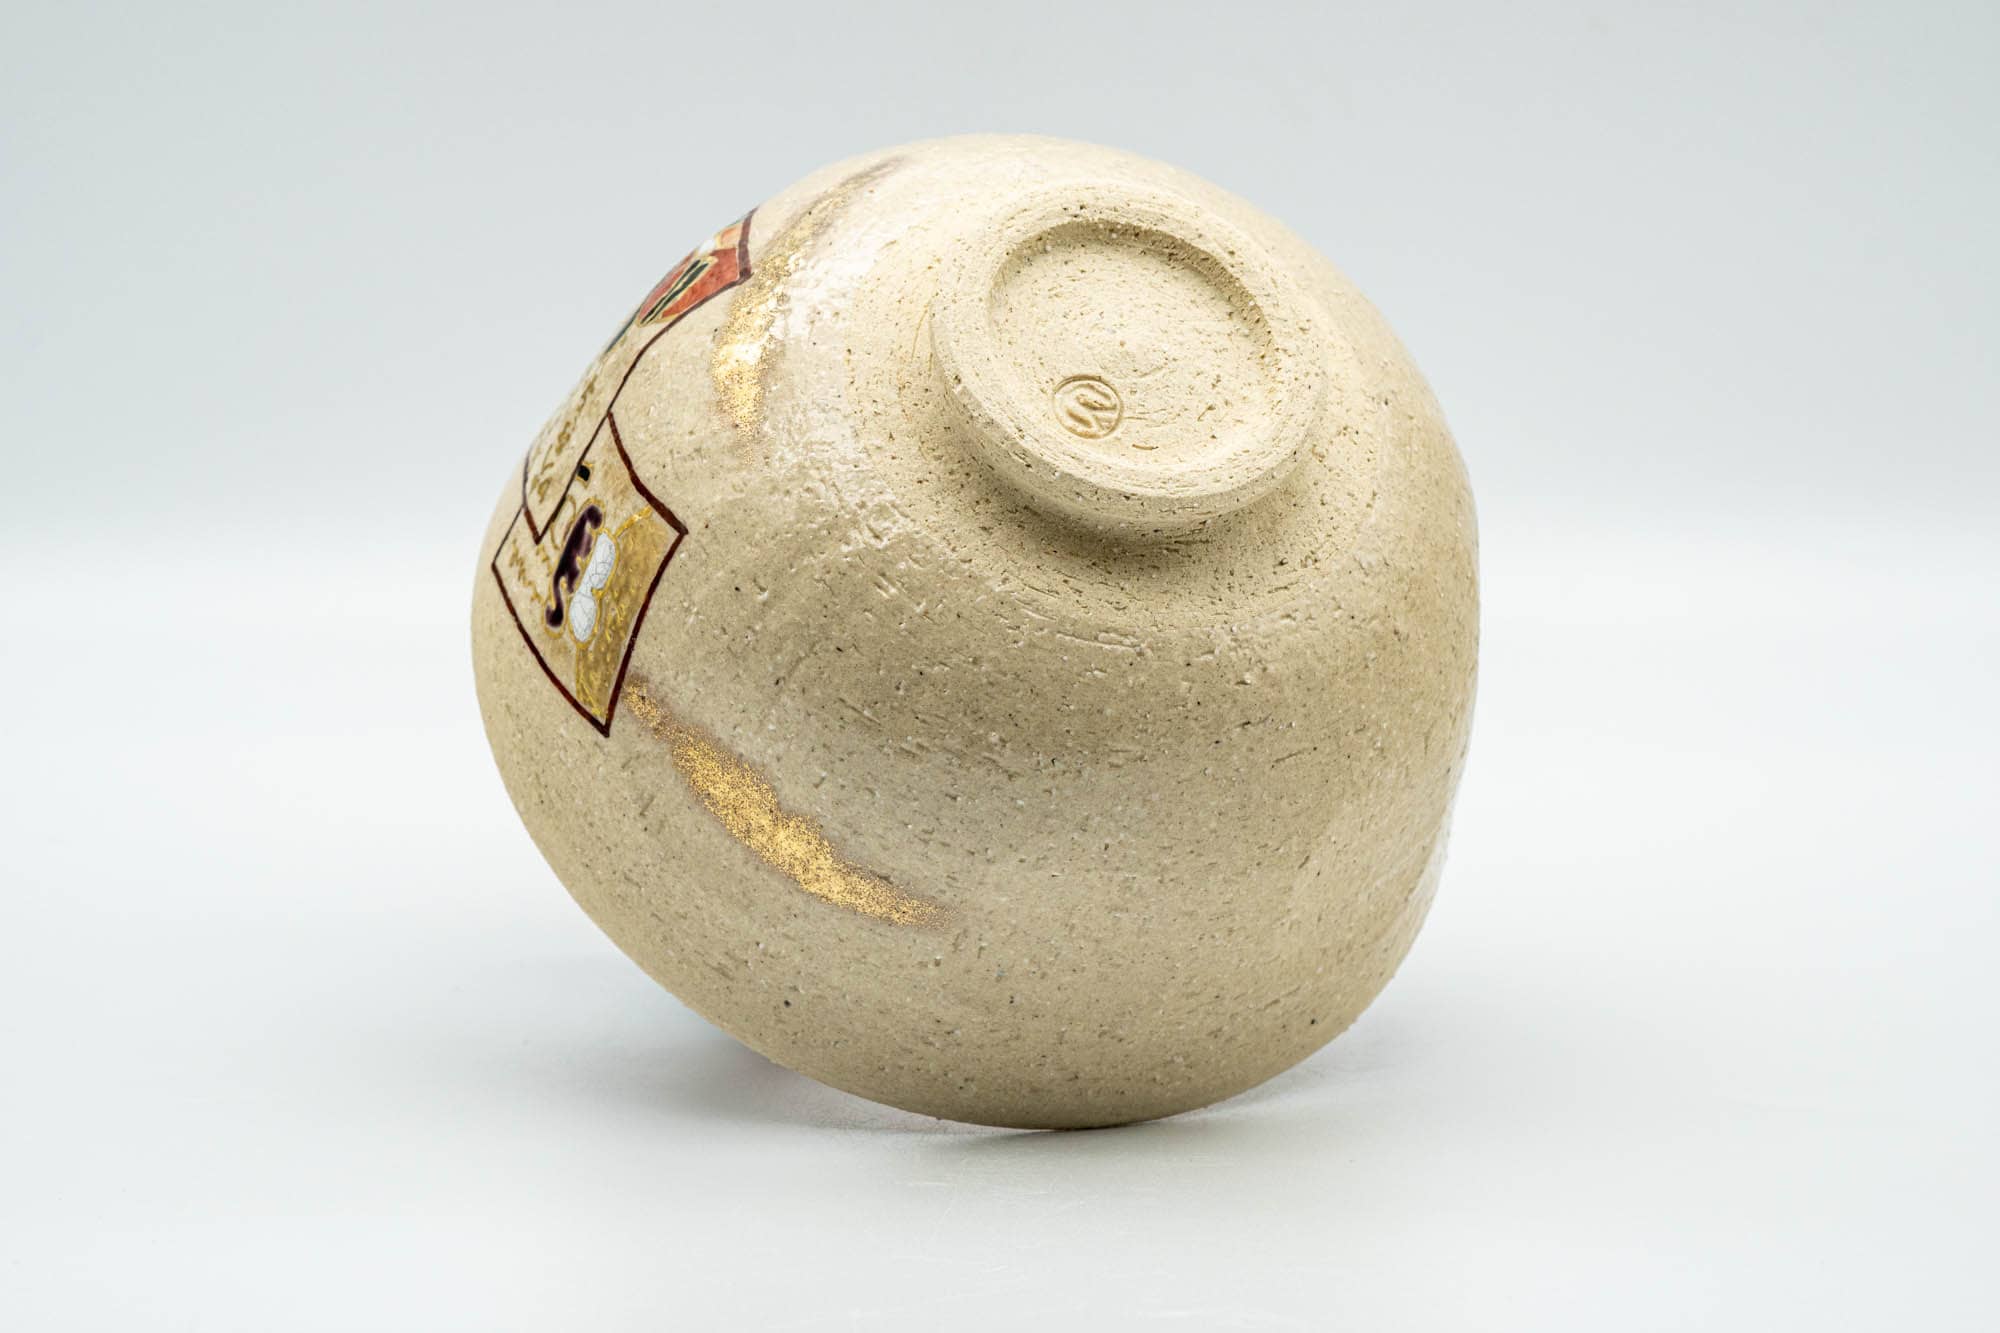 Japanese Matcha Bowl - Beige Geometric Gold Script Kyo-yaki Chawan - 350ml - Tezumi